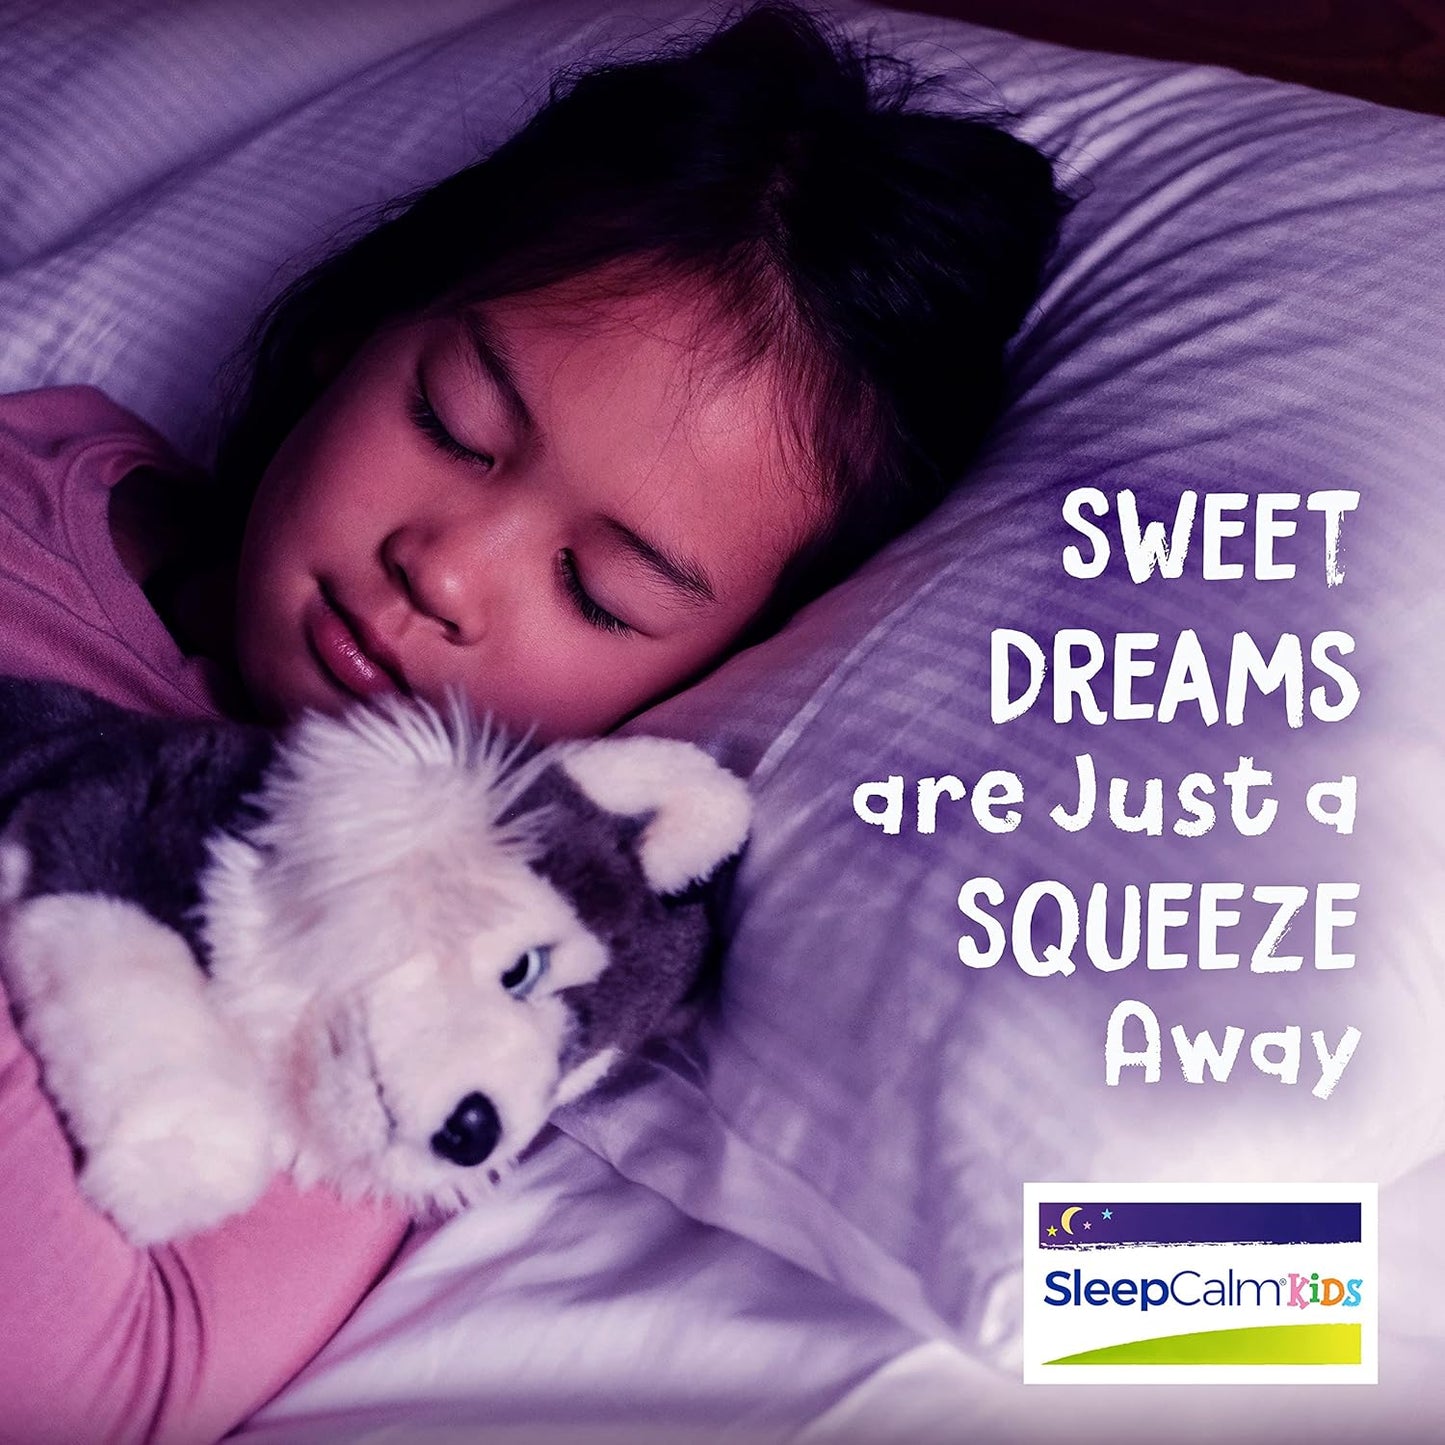 Boiron SleepCalm Kids Liquid Doses Sleep Aid for Deep, Relaxing, Restful Nighttime Sleep 15 Count